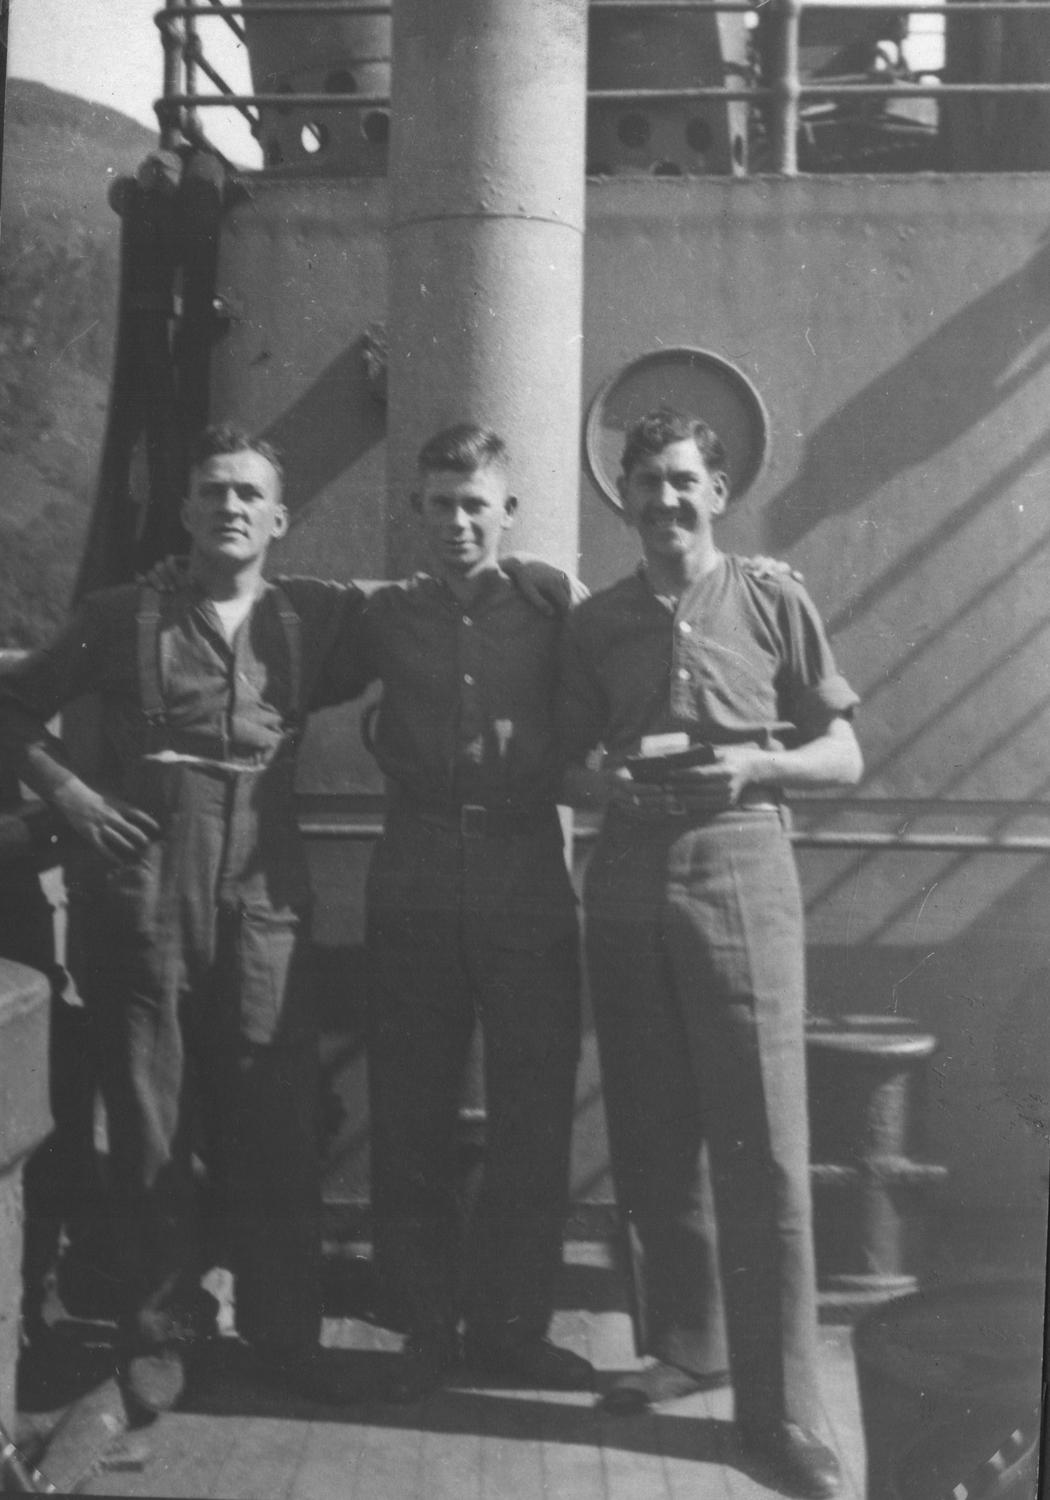 Lt's Morgan Jenkins, John Vanderwerve, and possibly Frank Mason